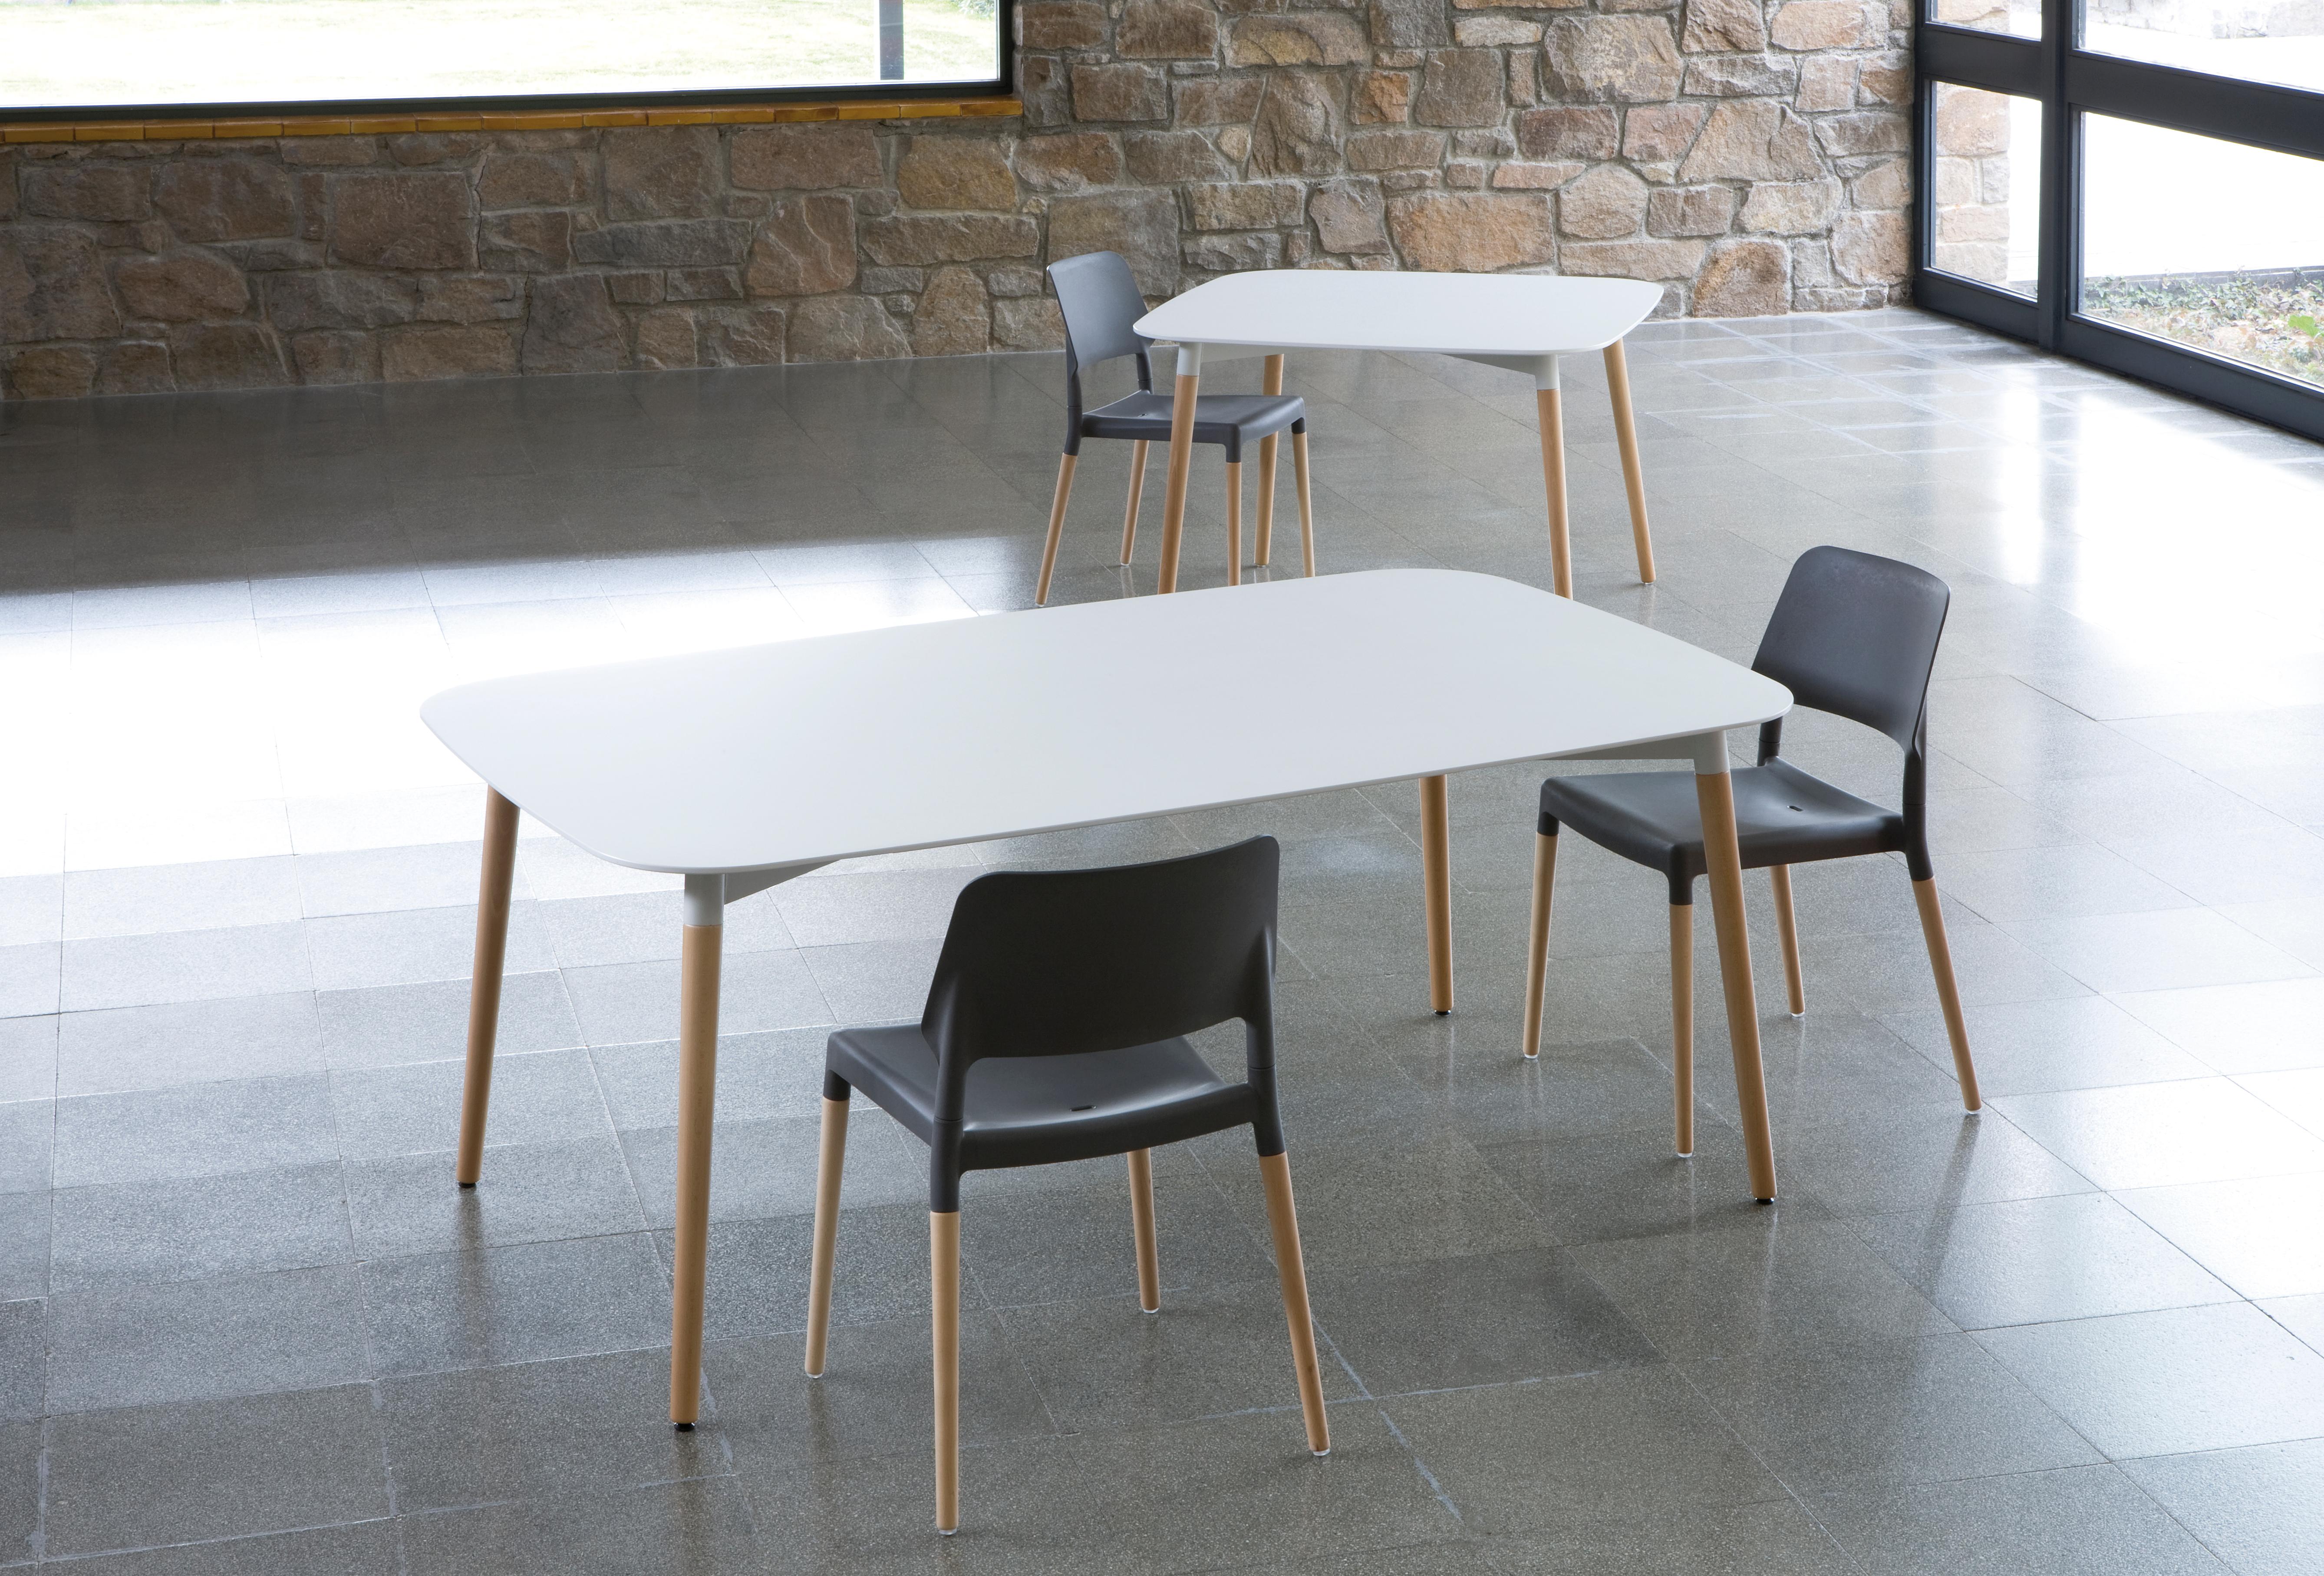 Beech Belloch Cuadrada Table by Lagranja Design